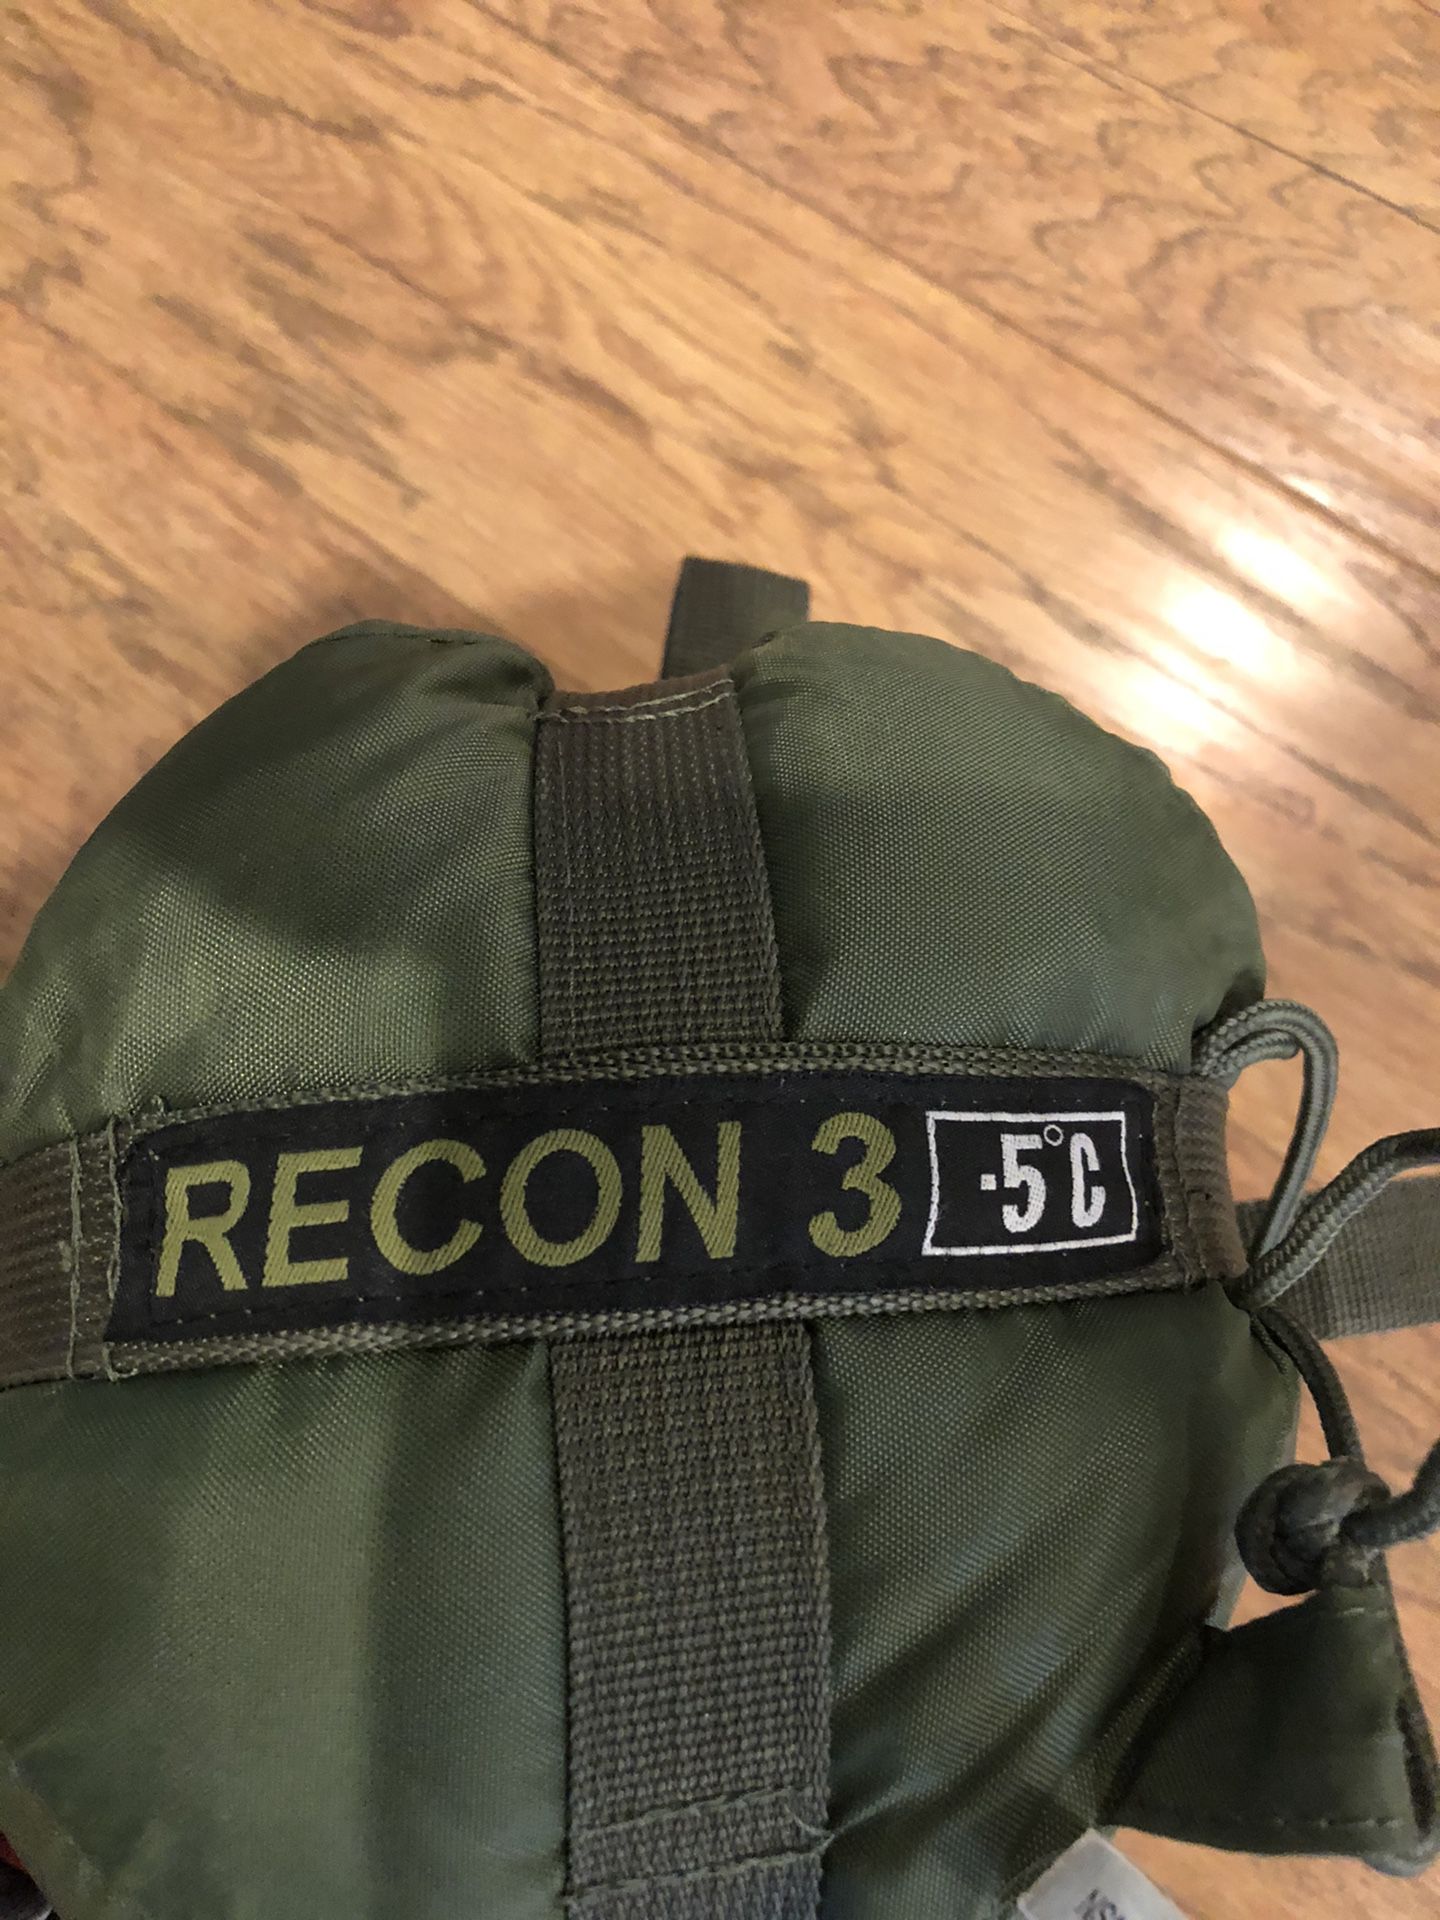 Recon 3 military sleeping bag